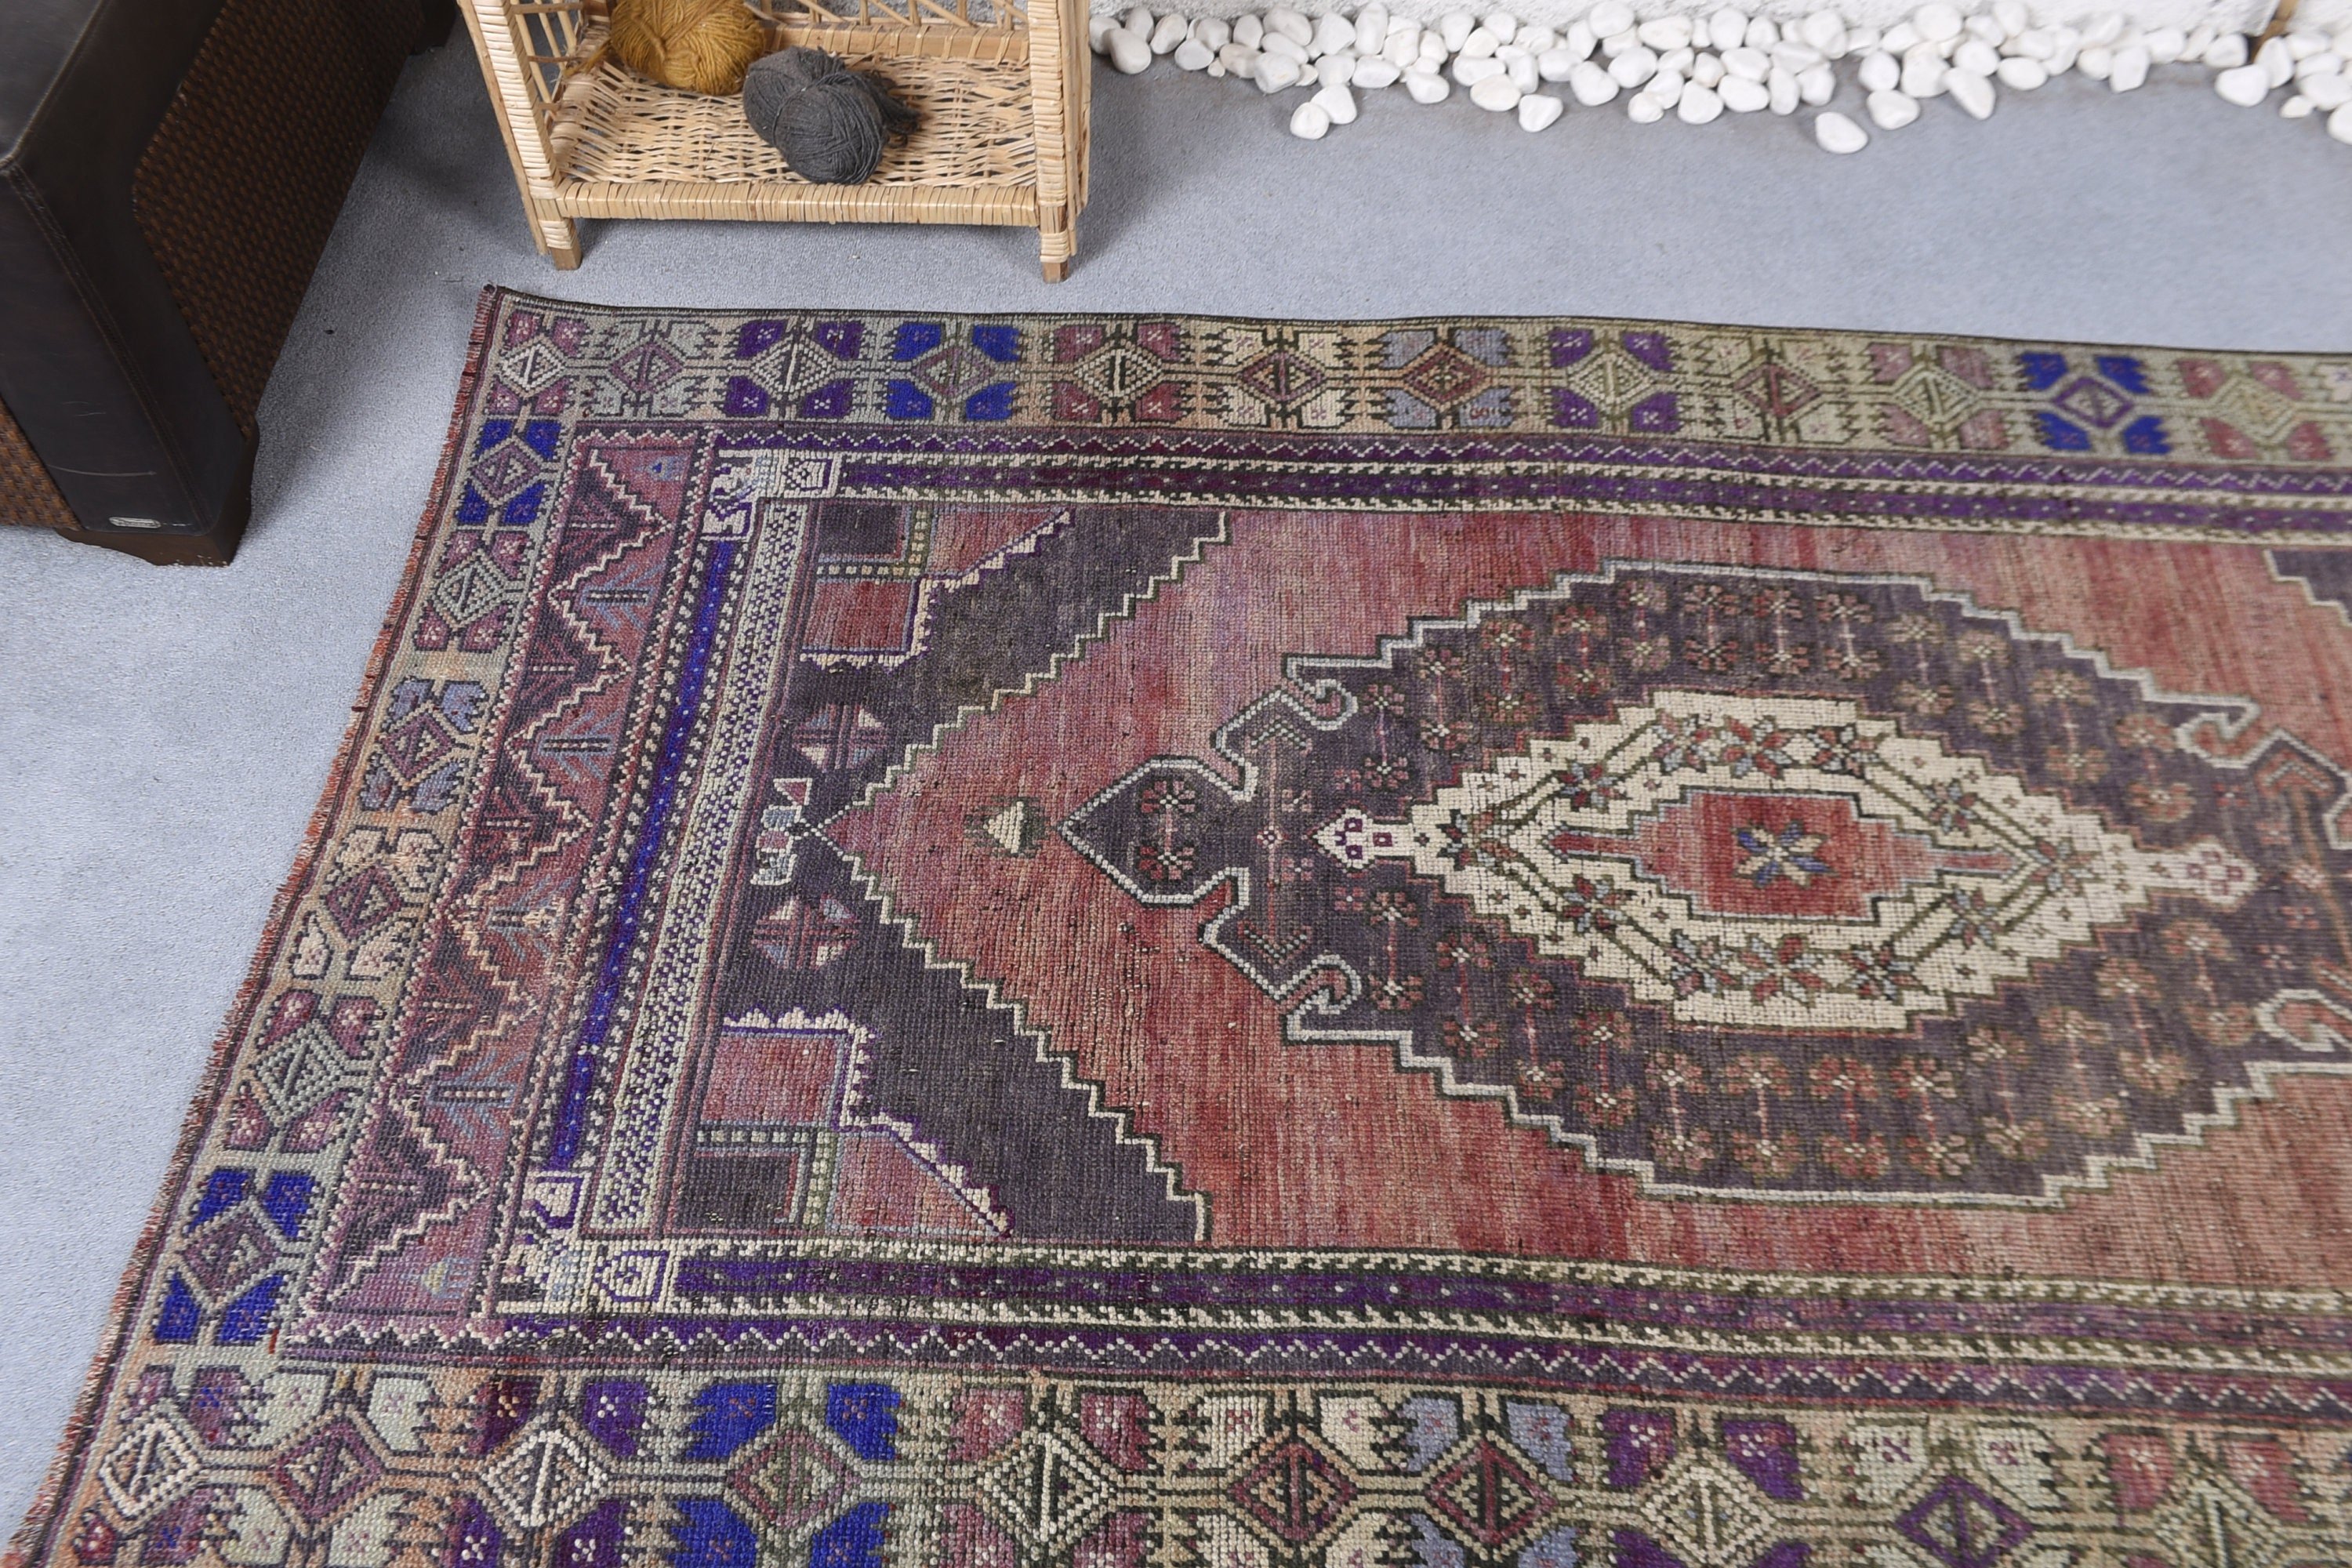 Anatolian Rug, Living Room Rugs, Bright Rug, Wool Rug, Red  3.7x7.7 ft Area Rugs, Turkish Rugs, Dining Room Rugs, Vintage Rug